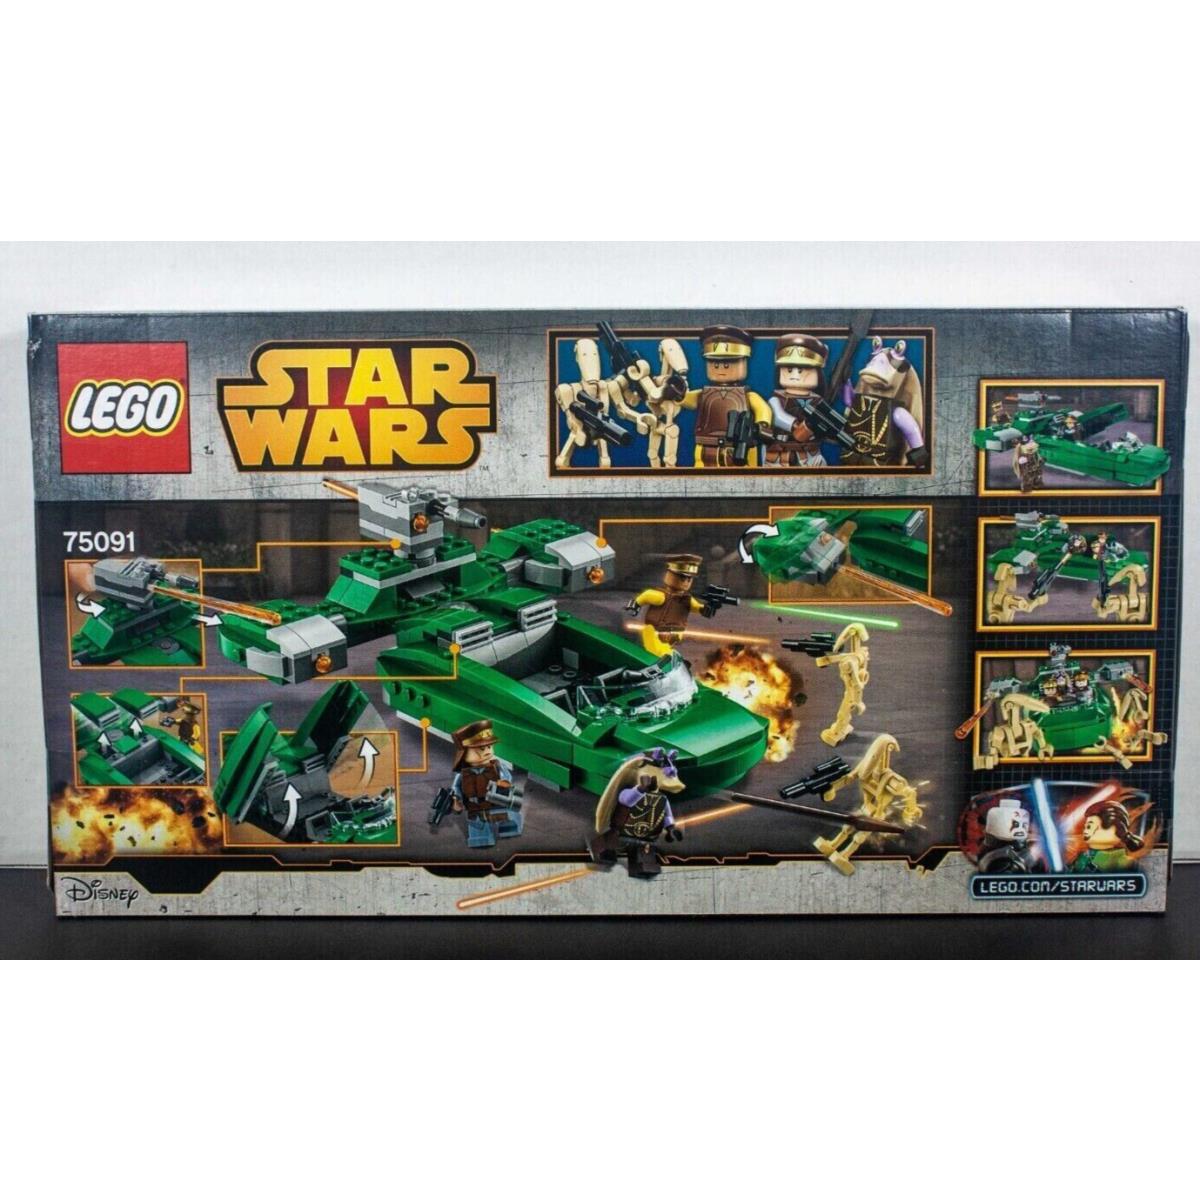 Lego Star Wars Flash Speeder 75091 Building Kit 312 Pcs Playset Retired Set